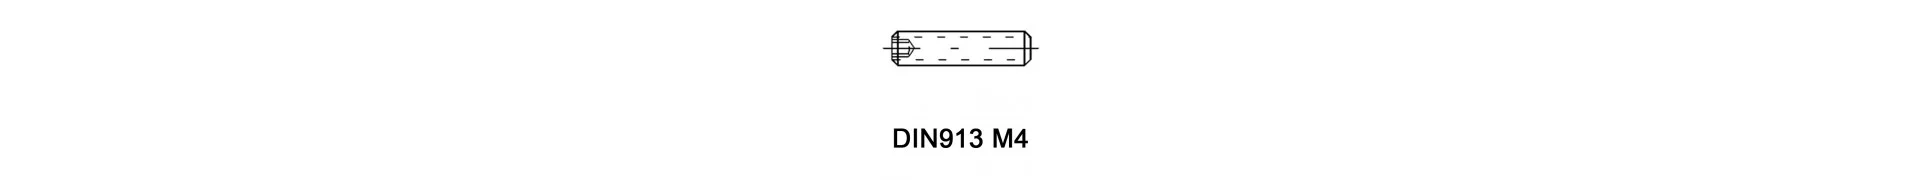 DIN913 M4